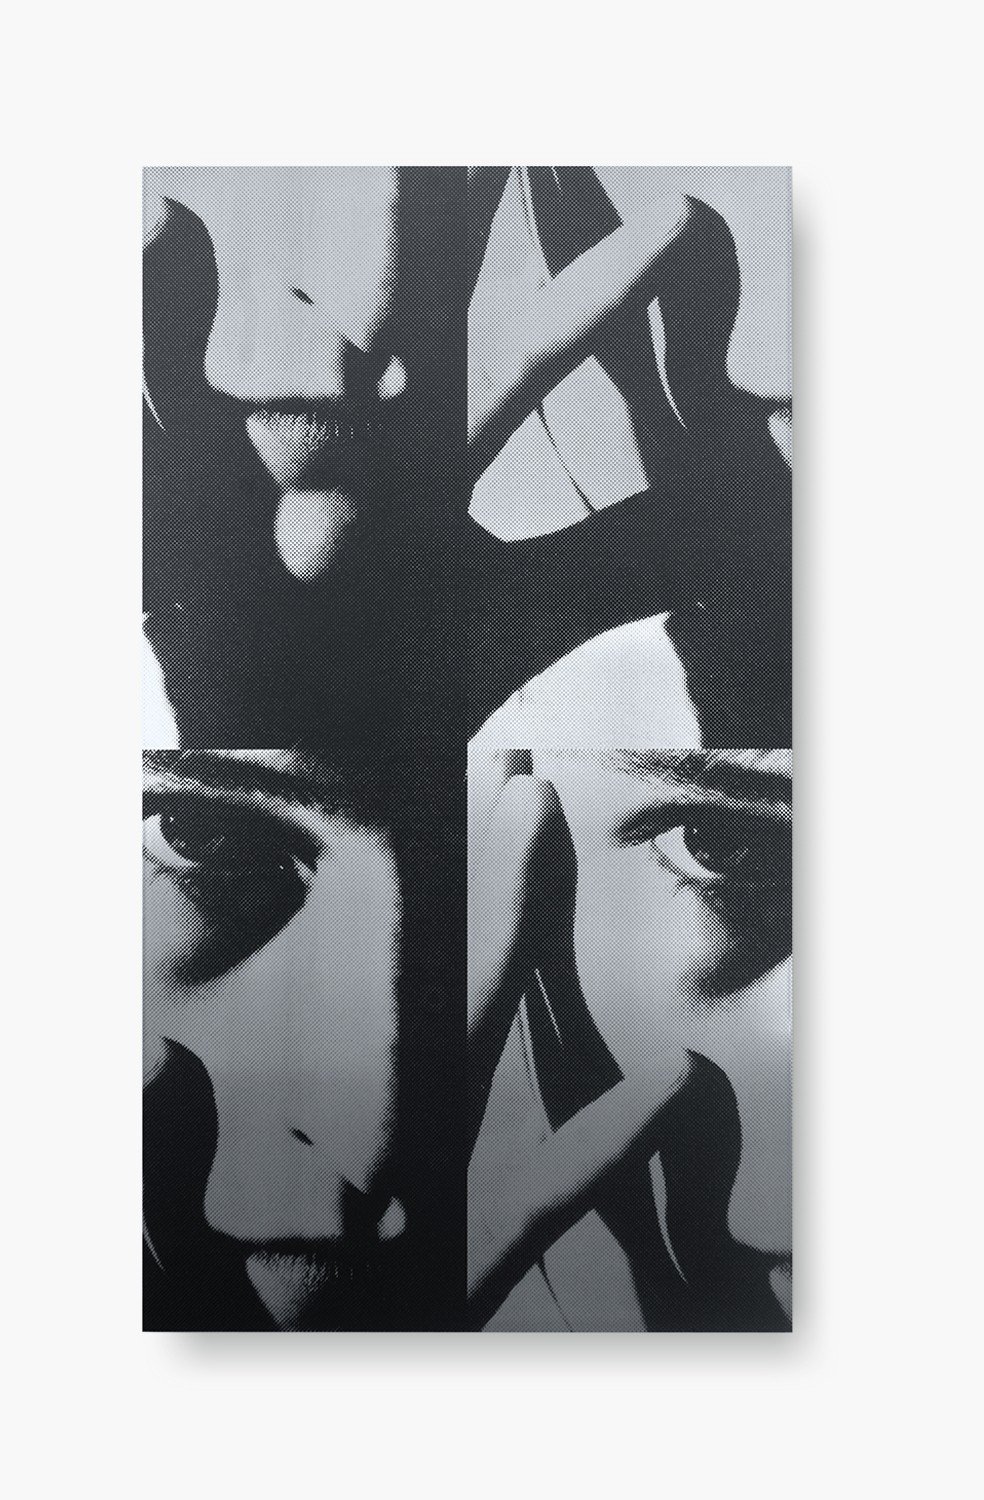 Nick OberthalerUntitled, 2014UV print on aluminium180 x 100 cm